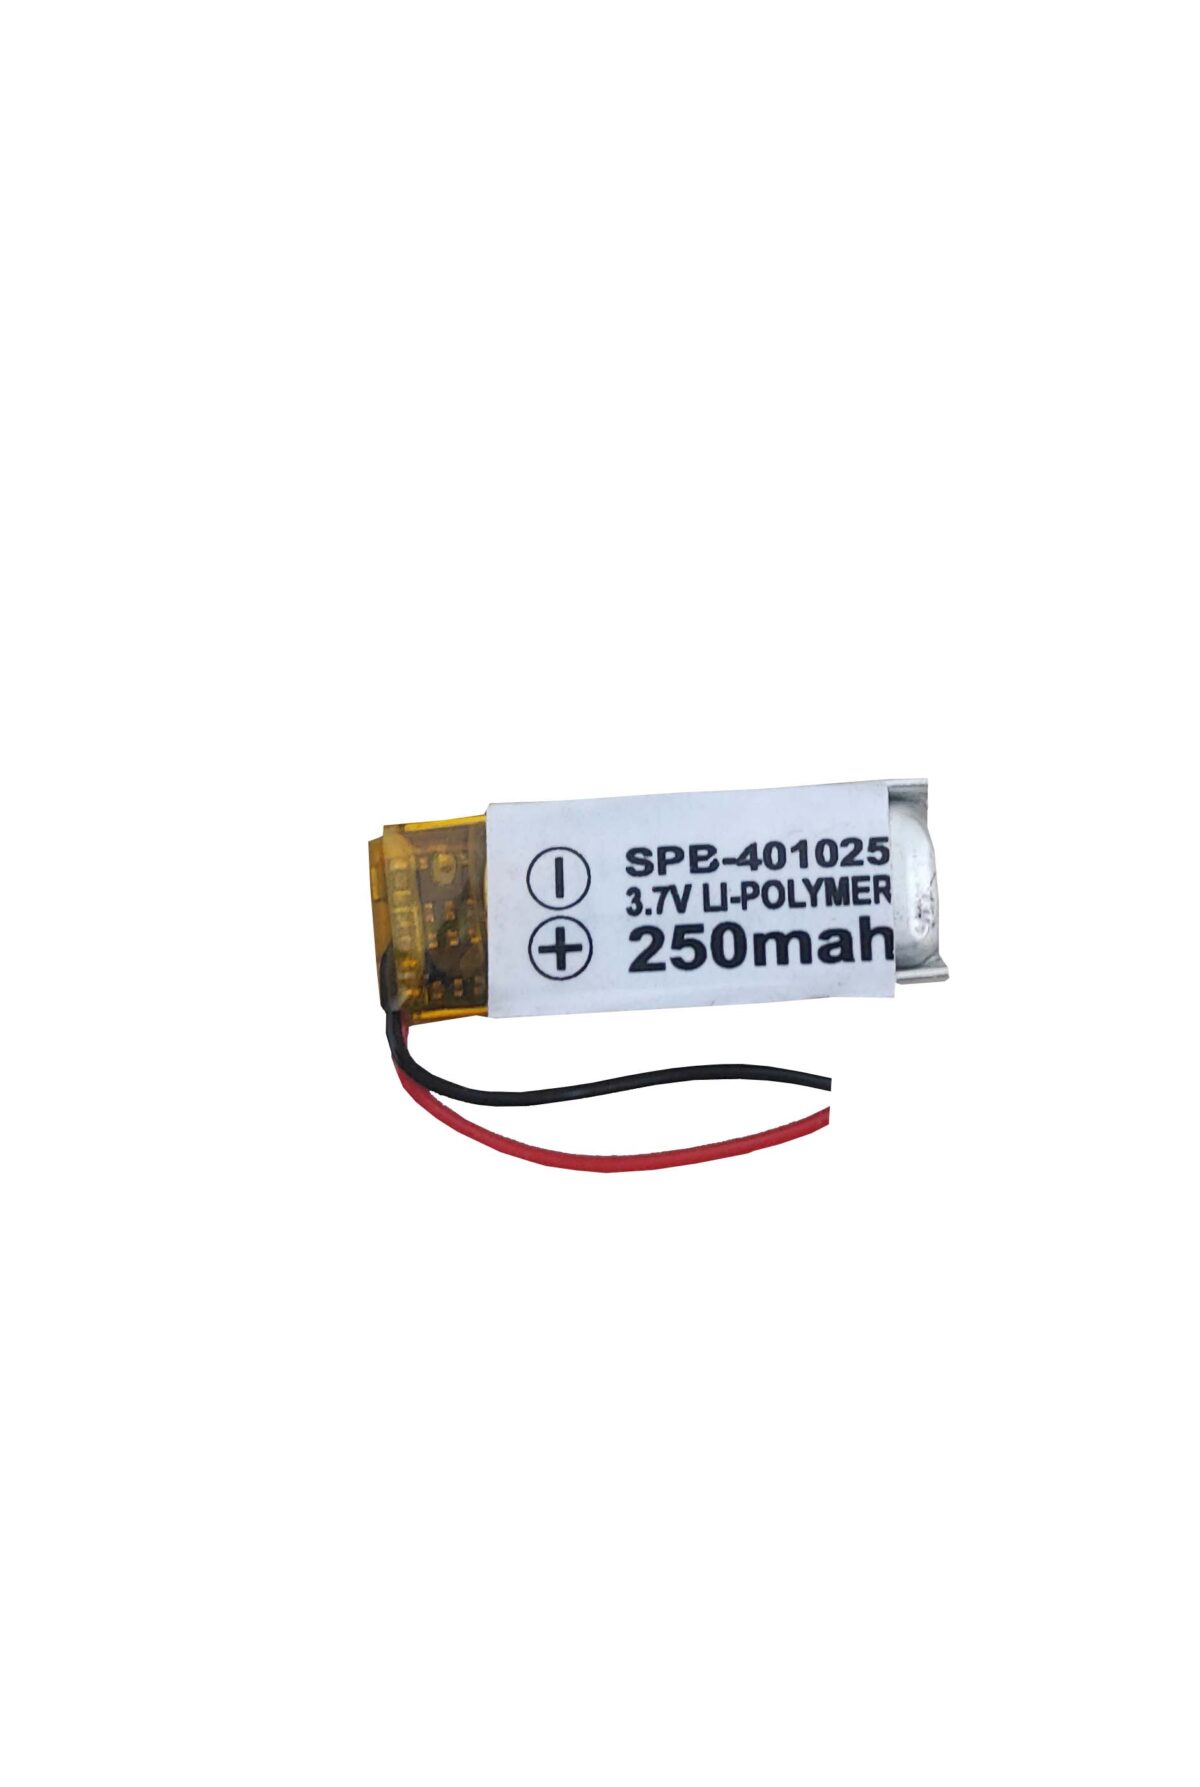 3.7V 250mAH (Lithium Polymer) Lipo Rechargeable Battery Model KP-401025